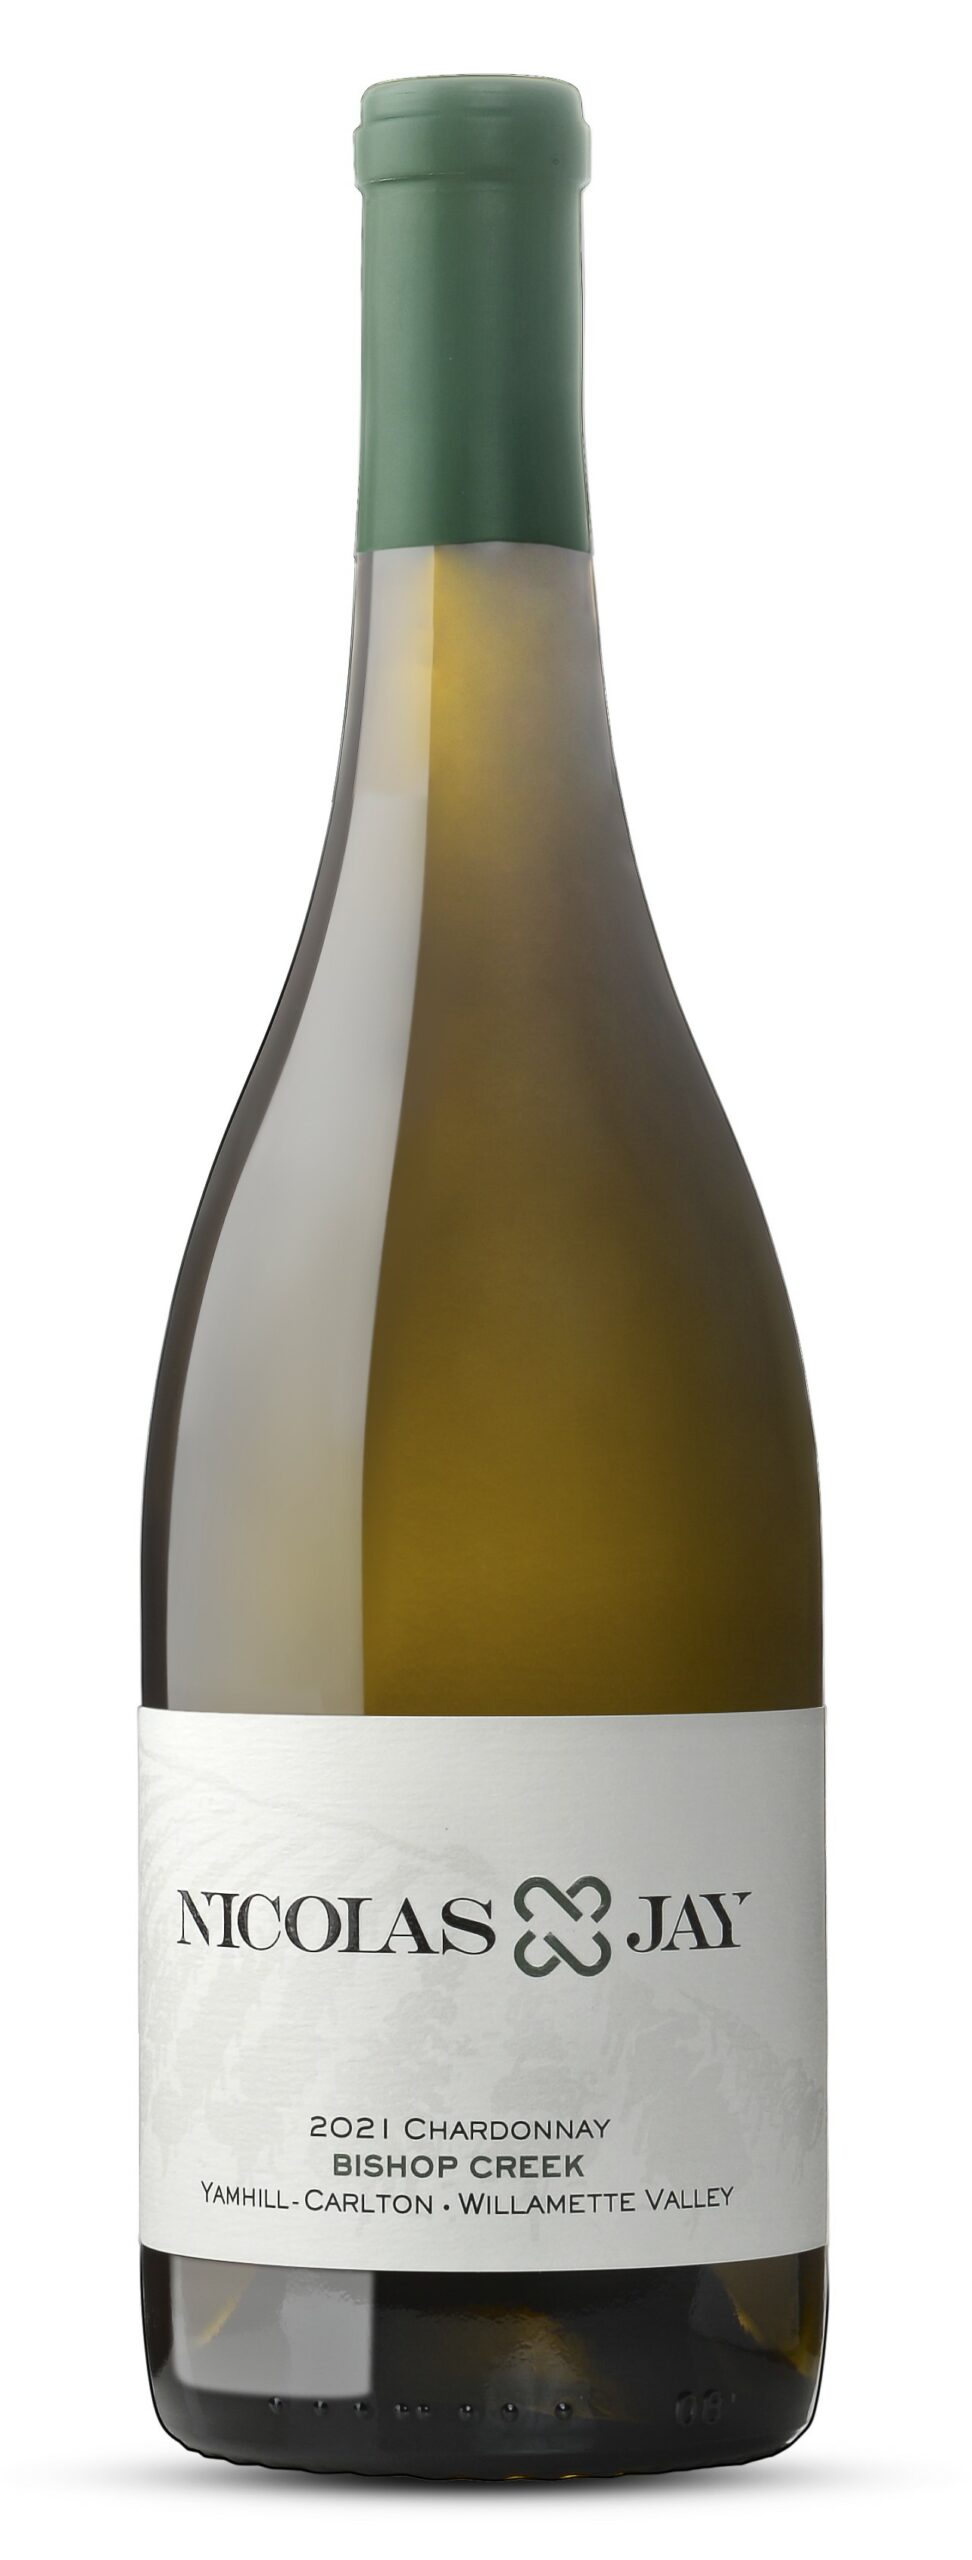 Bottle of 2021 Nicolas-Jay Chardonnay